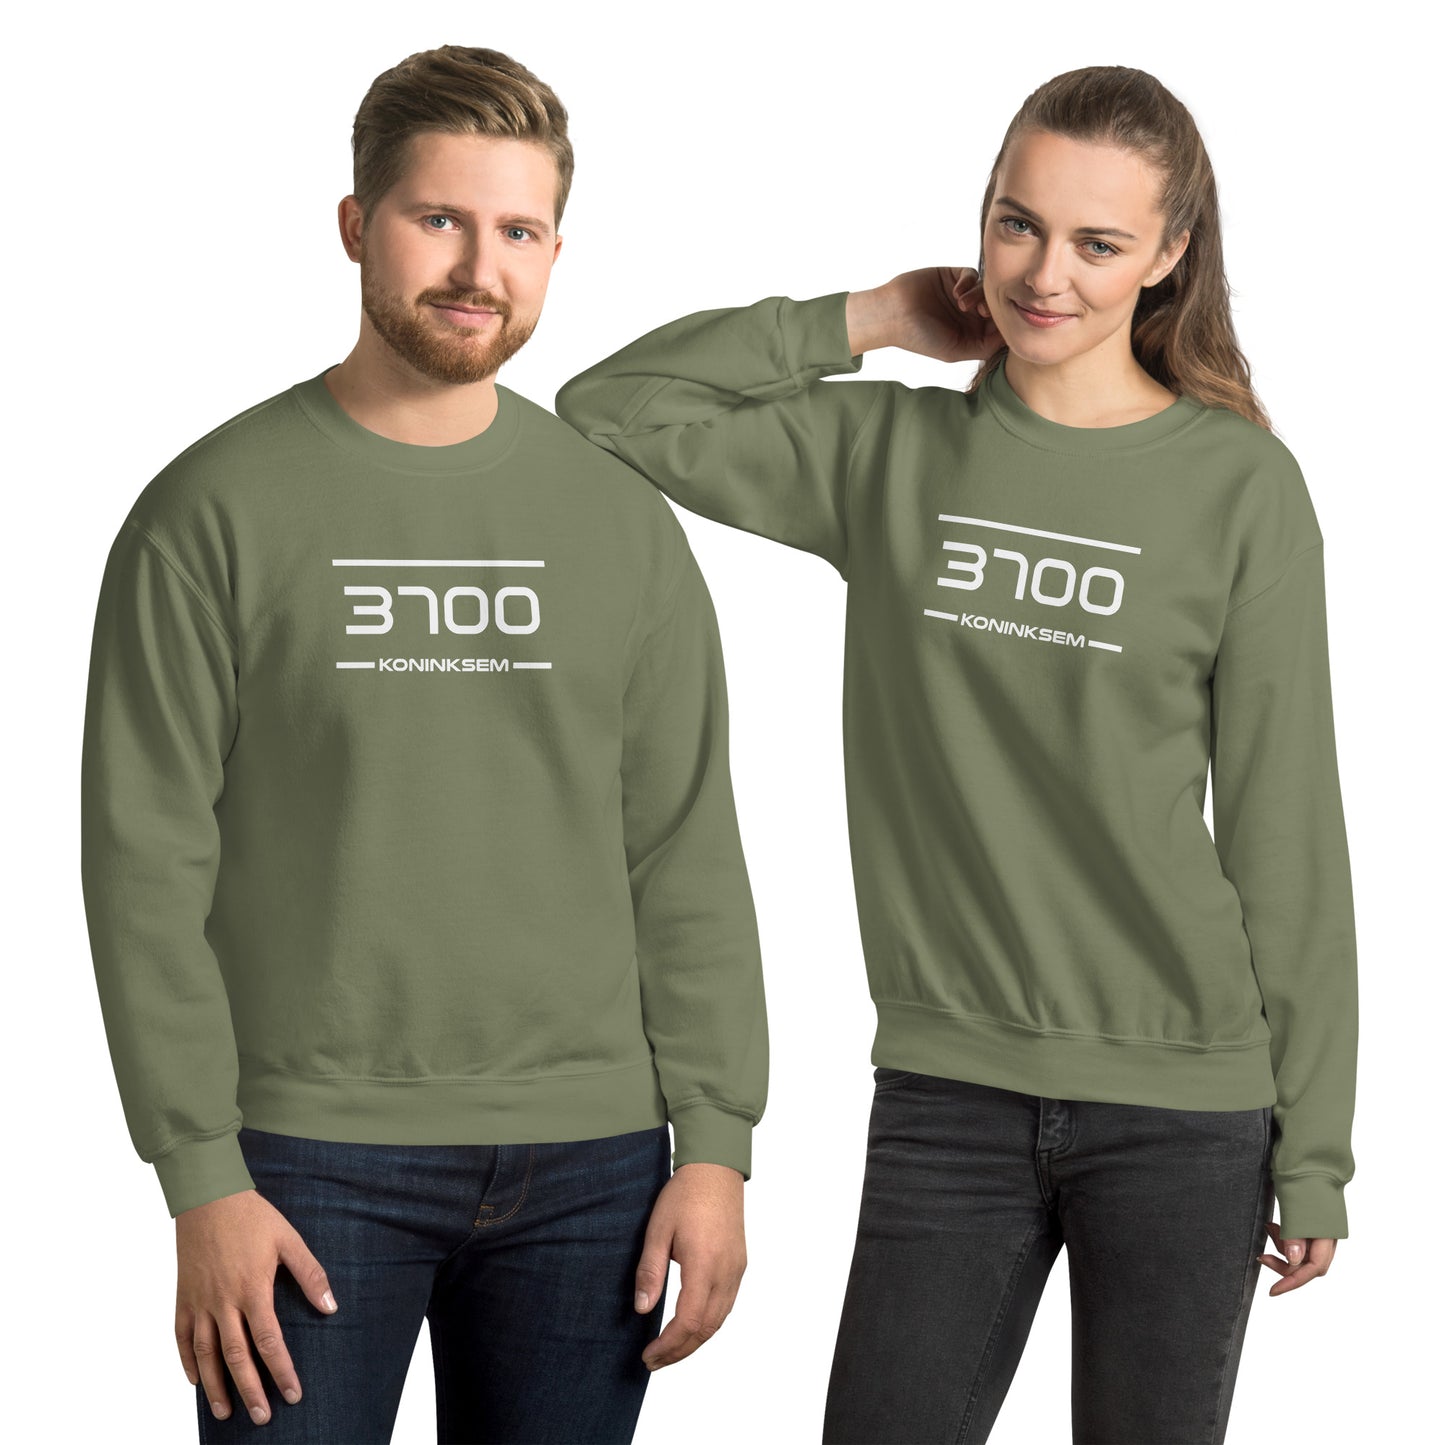 Sweater - 3700 - Koninksem (M/V)